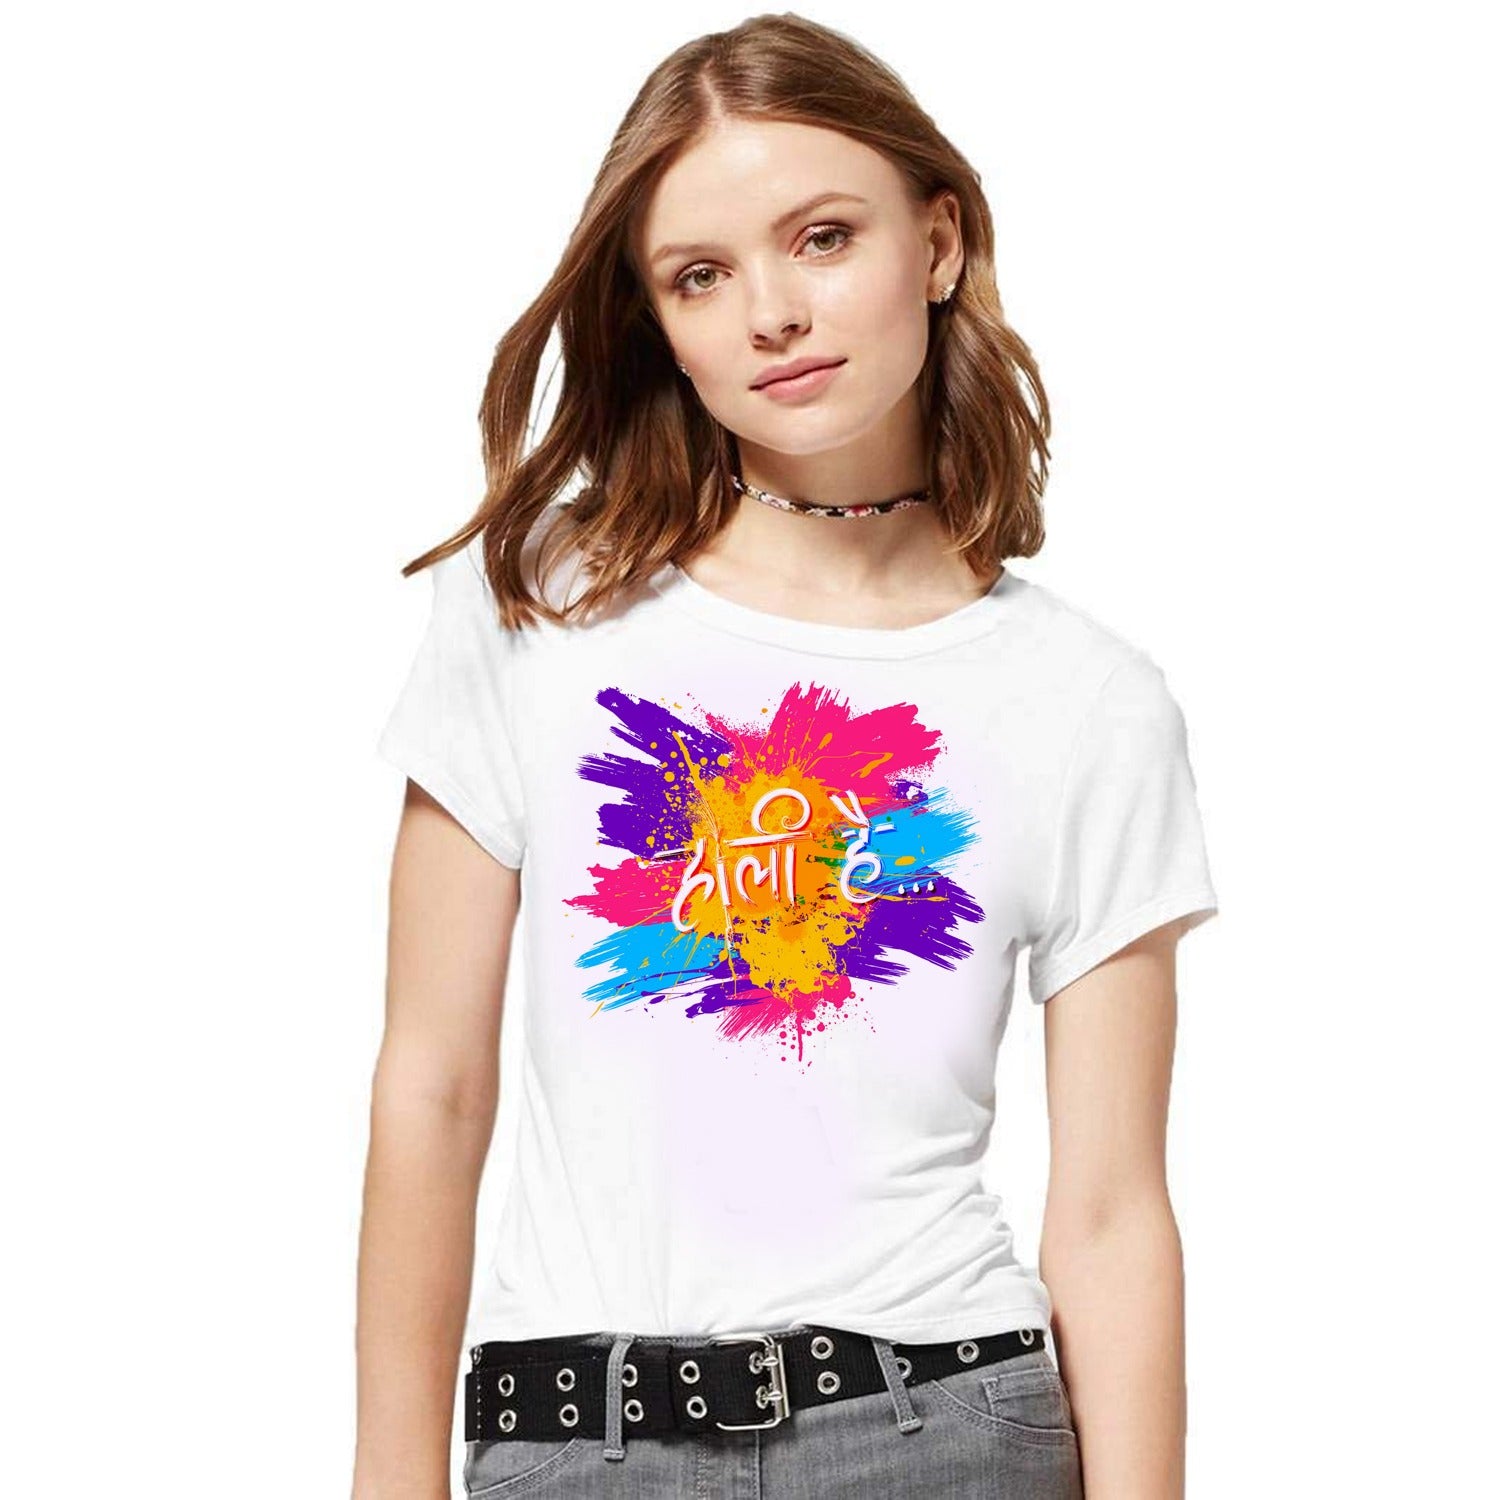 Holi Hai with Hindi Txt Colorful graphic Print t-shirt